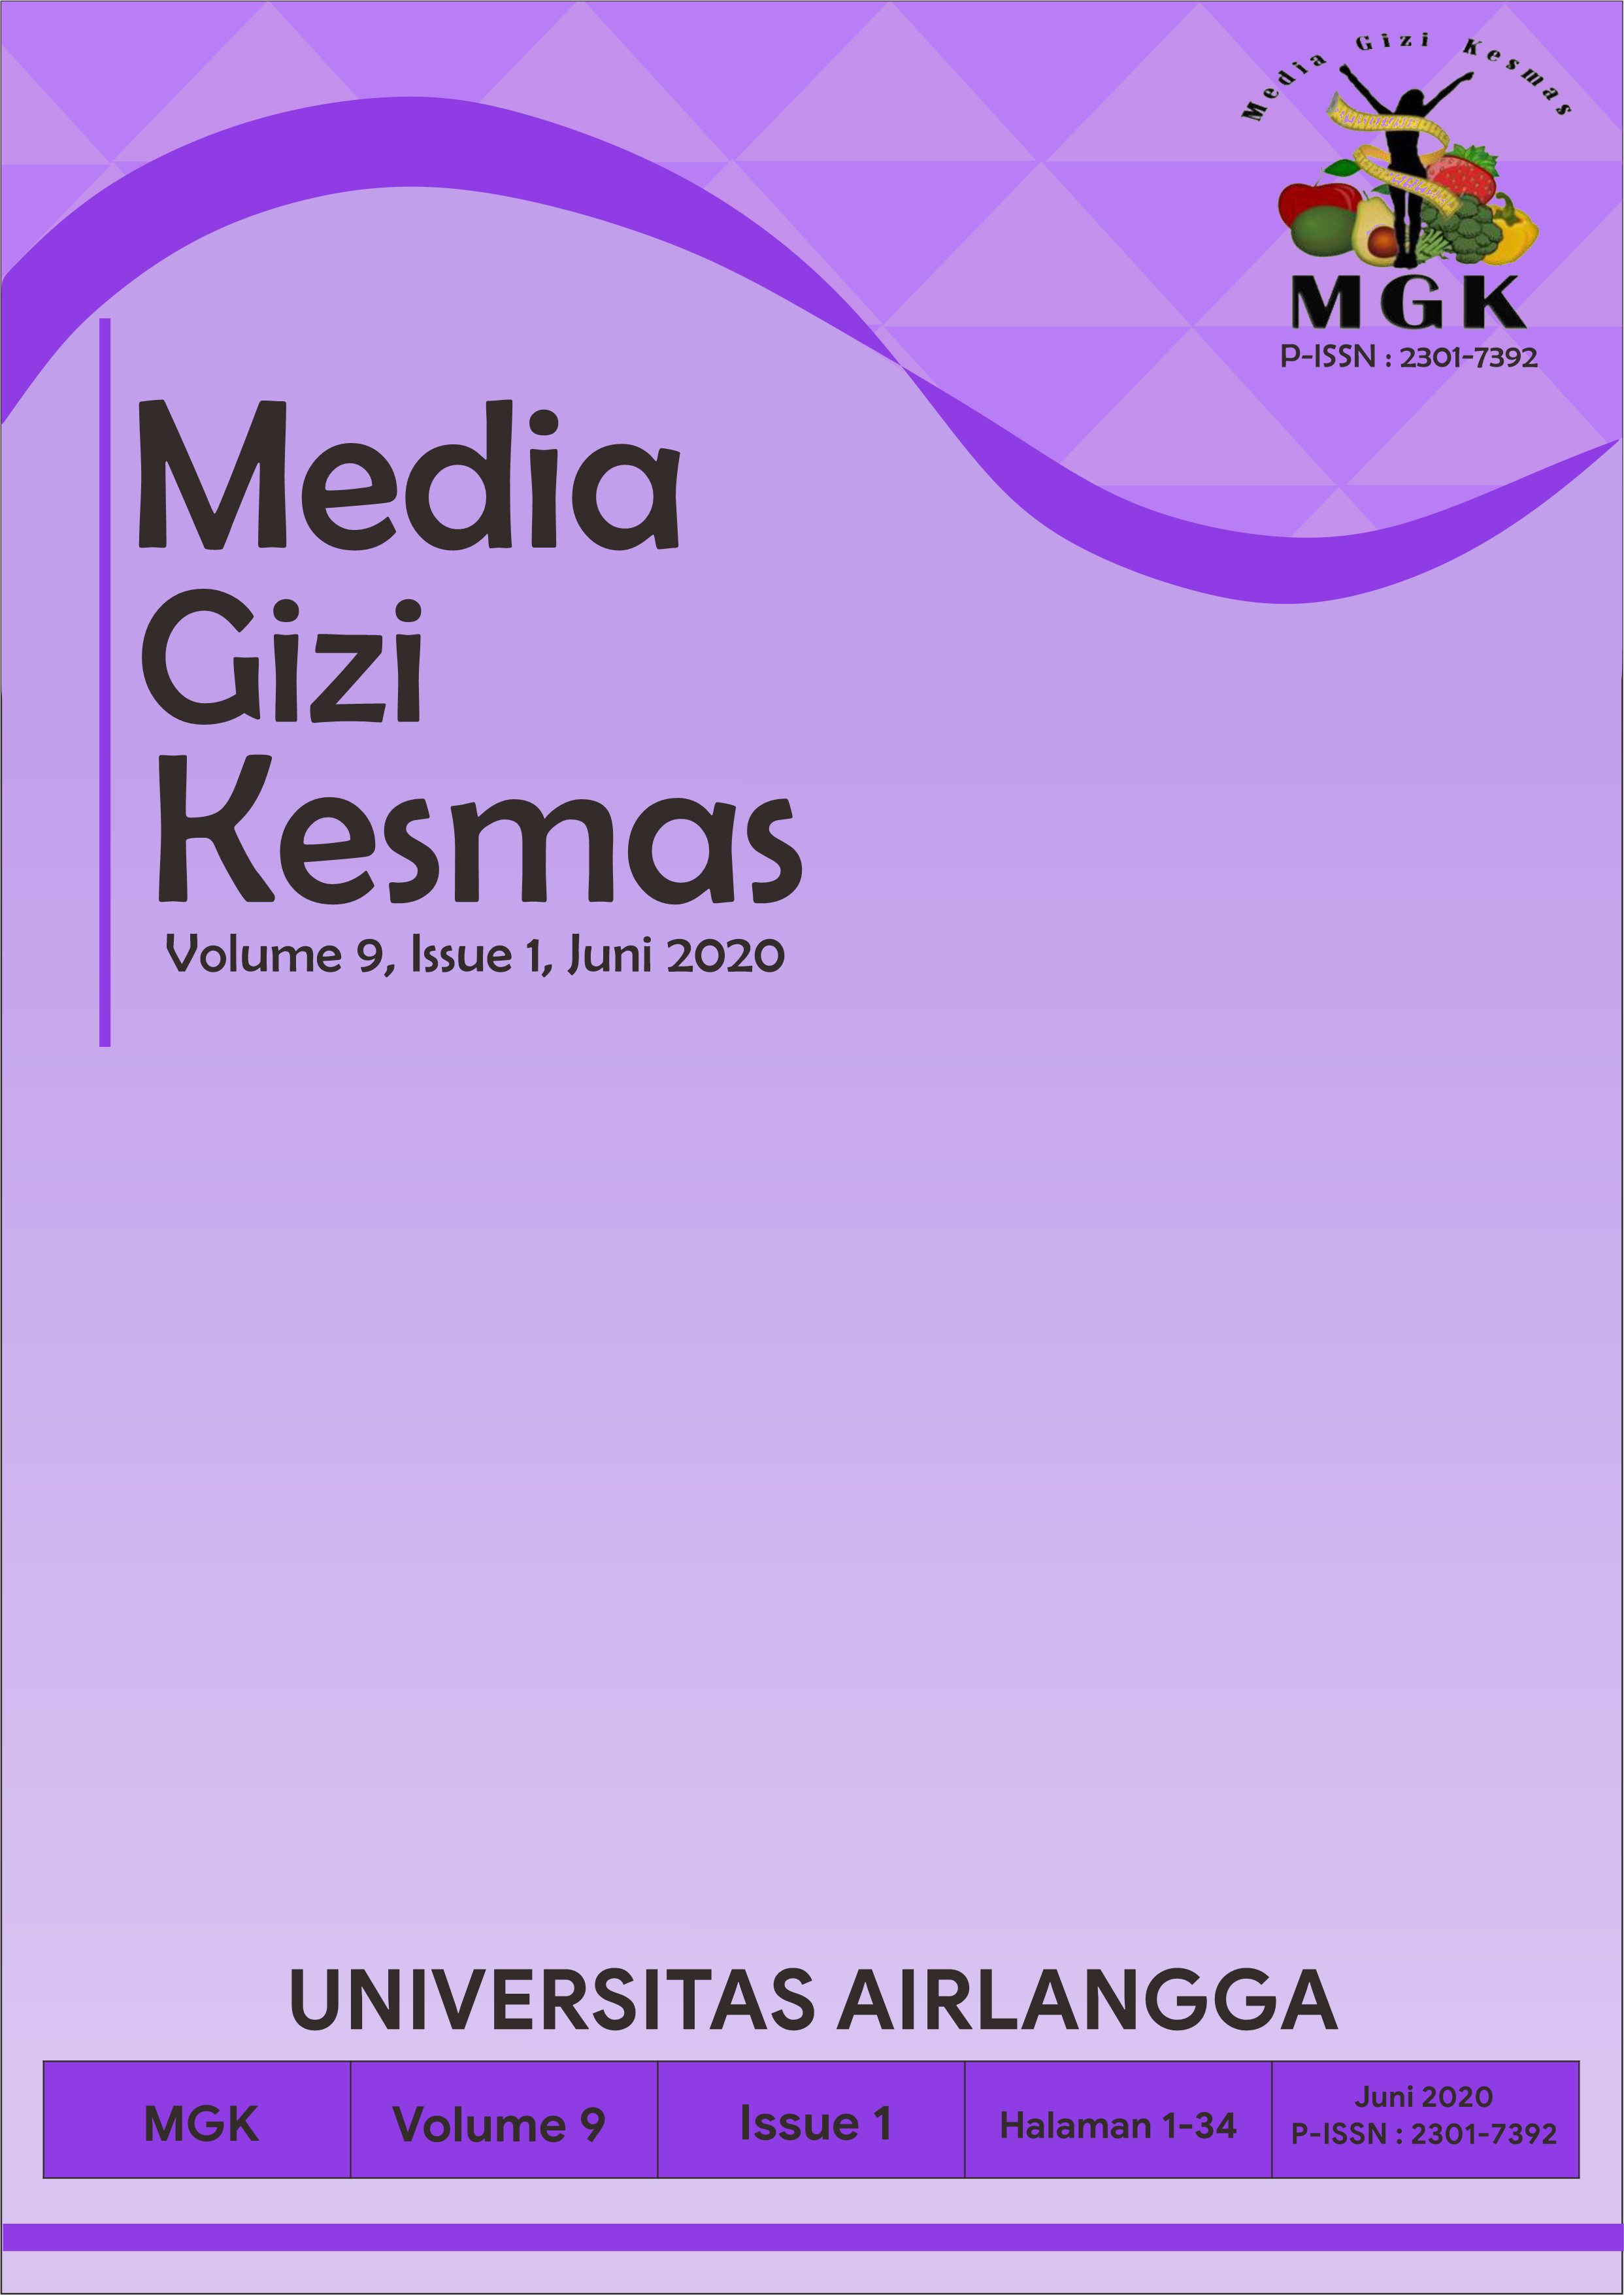 						View Vol. 9 No. 1 (2020): MEDIA GIZI KESMAS (JUNE 2020)
					